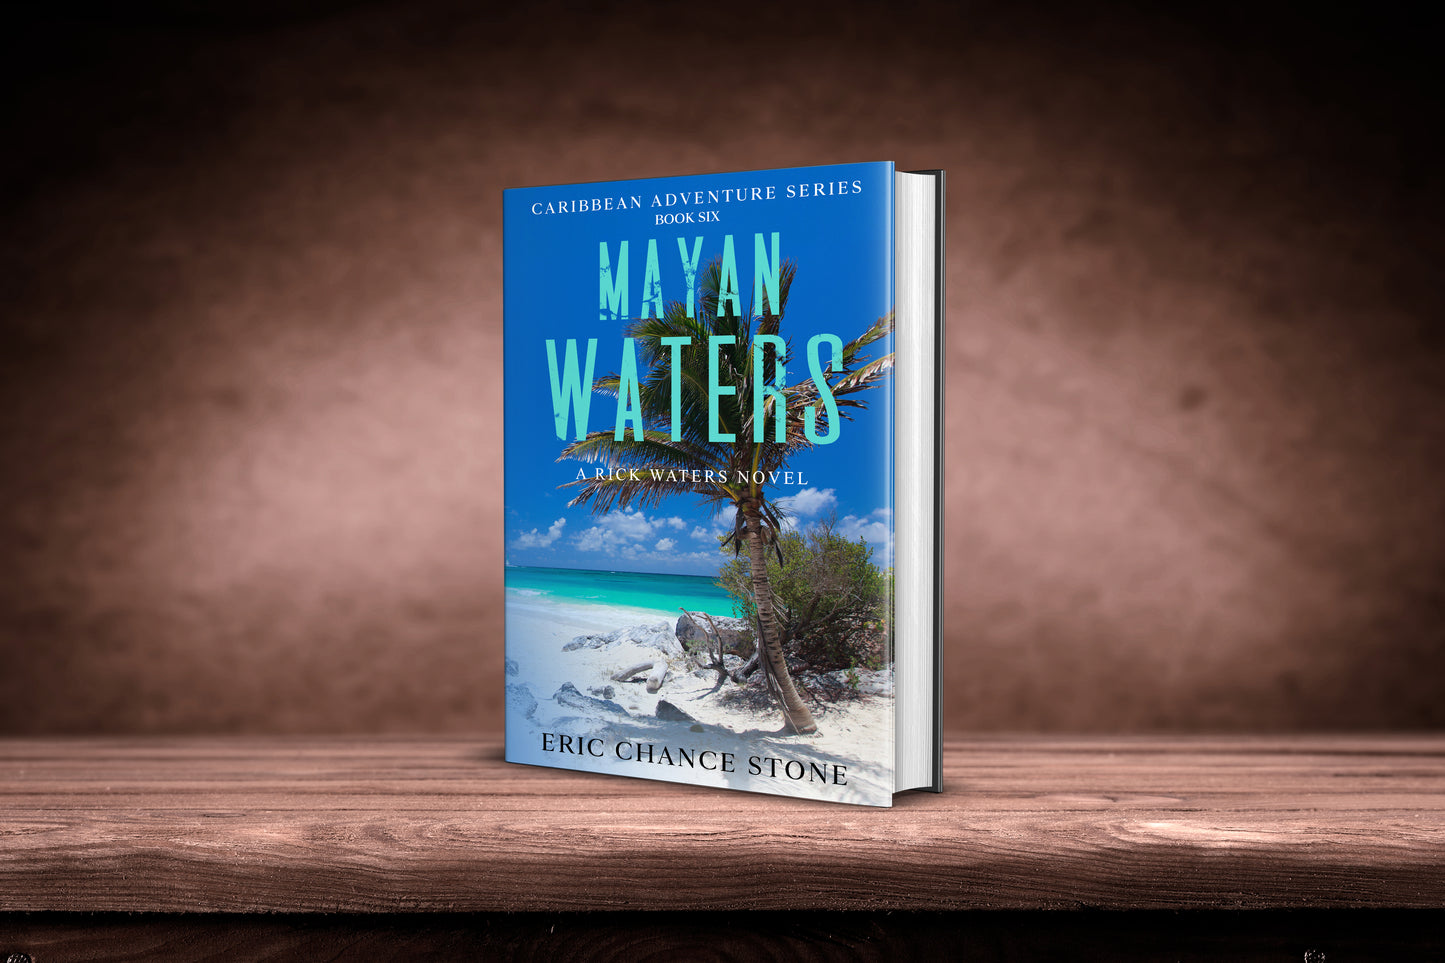 Mayan Waters Paperback - Book 6:A Rick Waters Novel (Caribbean Adventure Series)